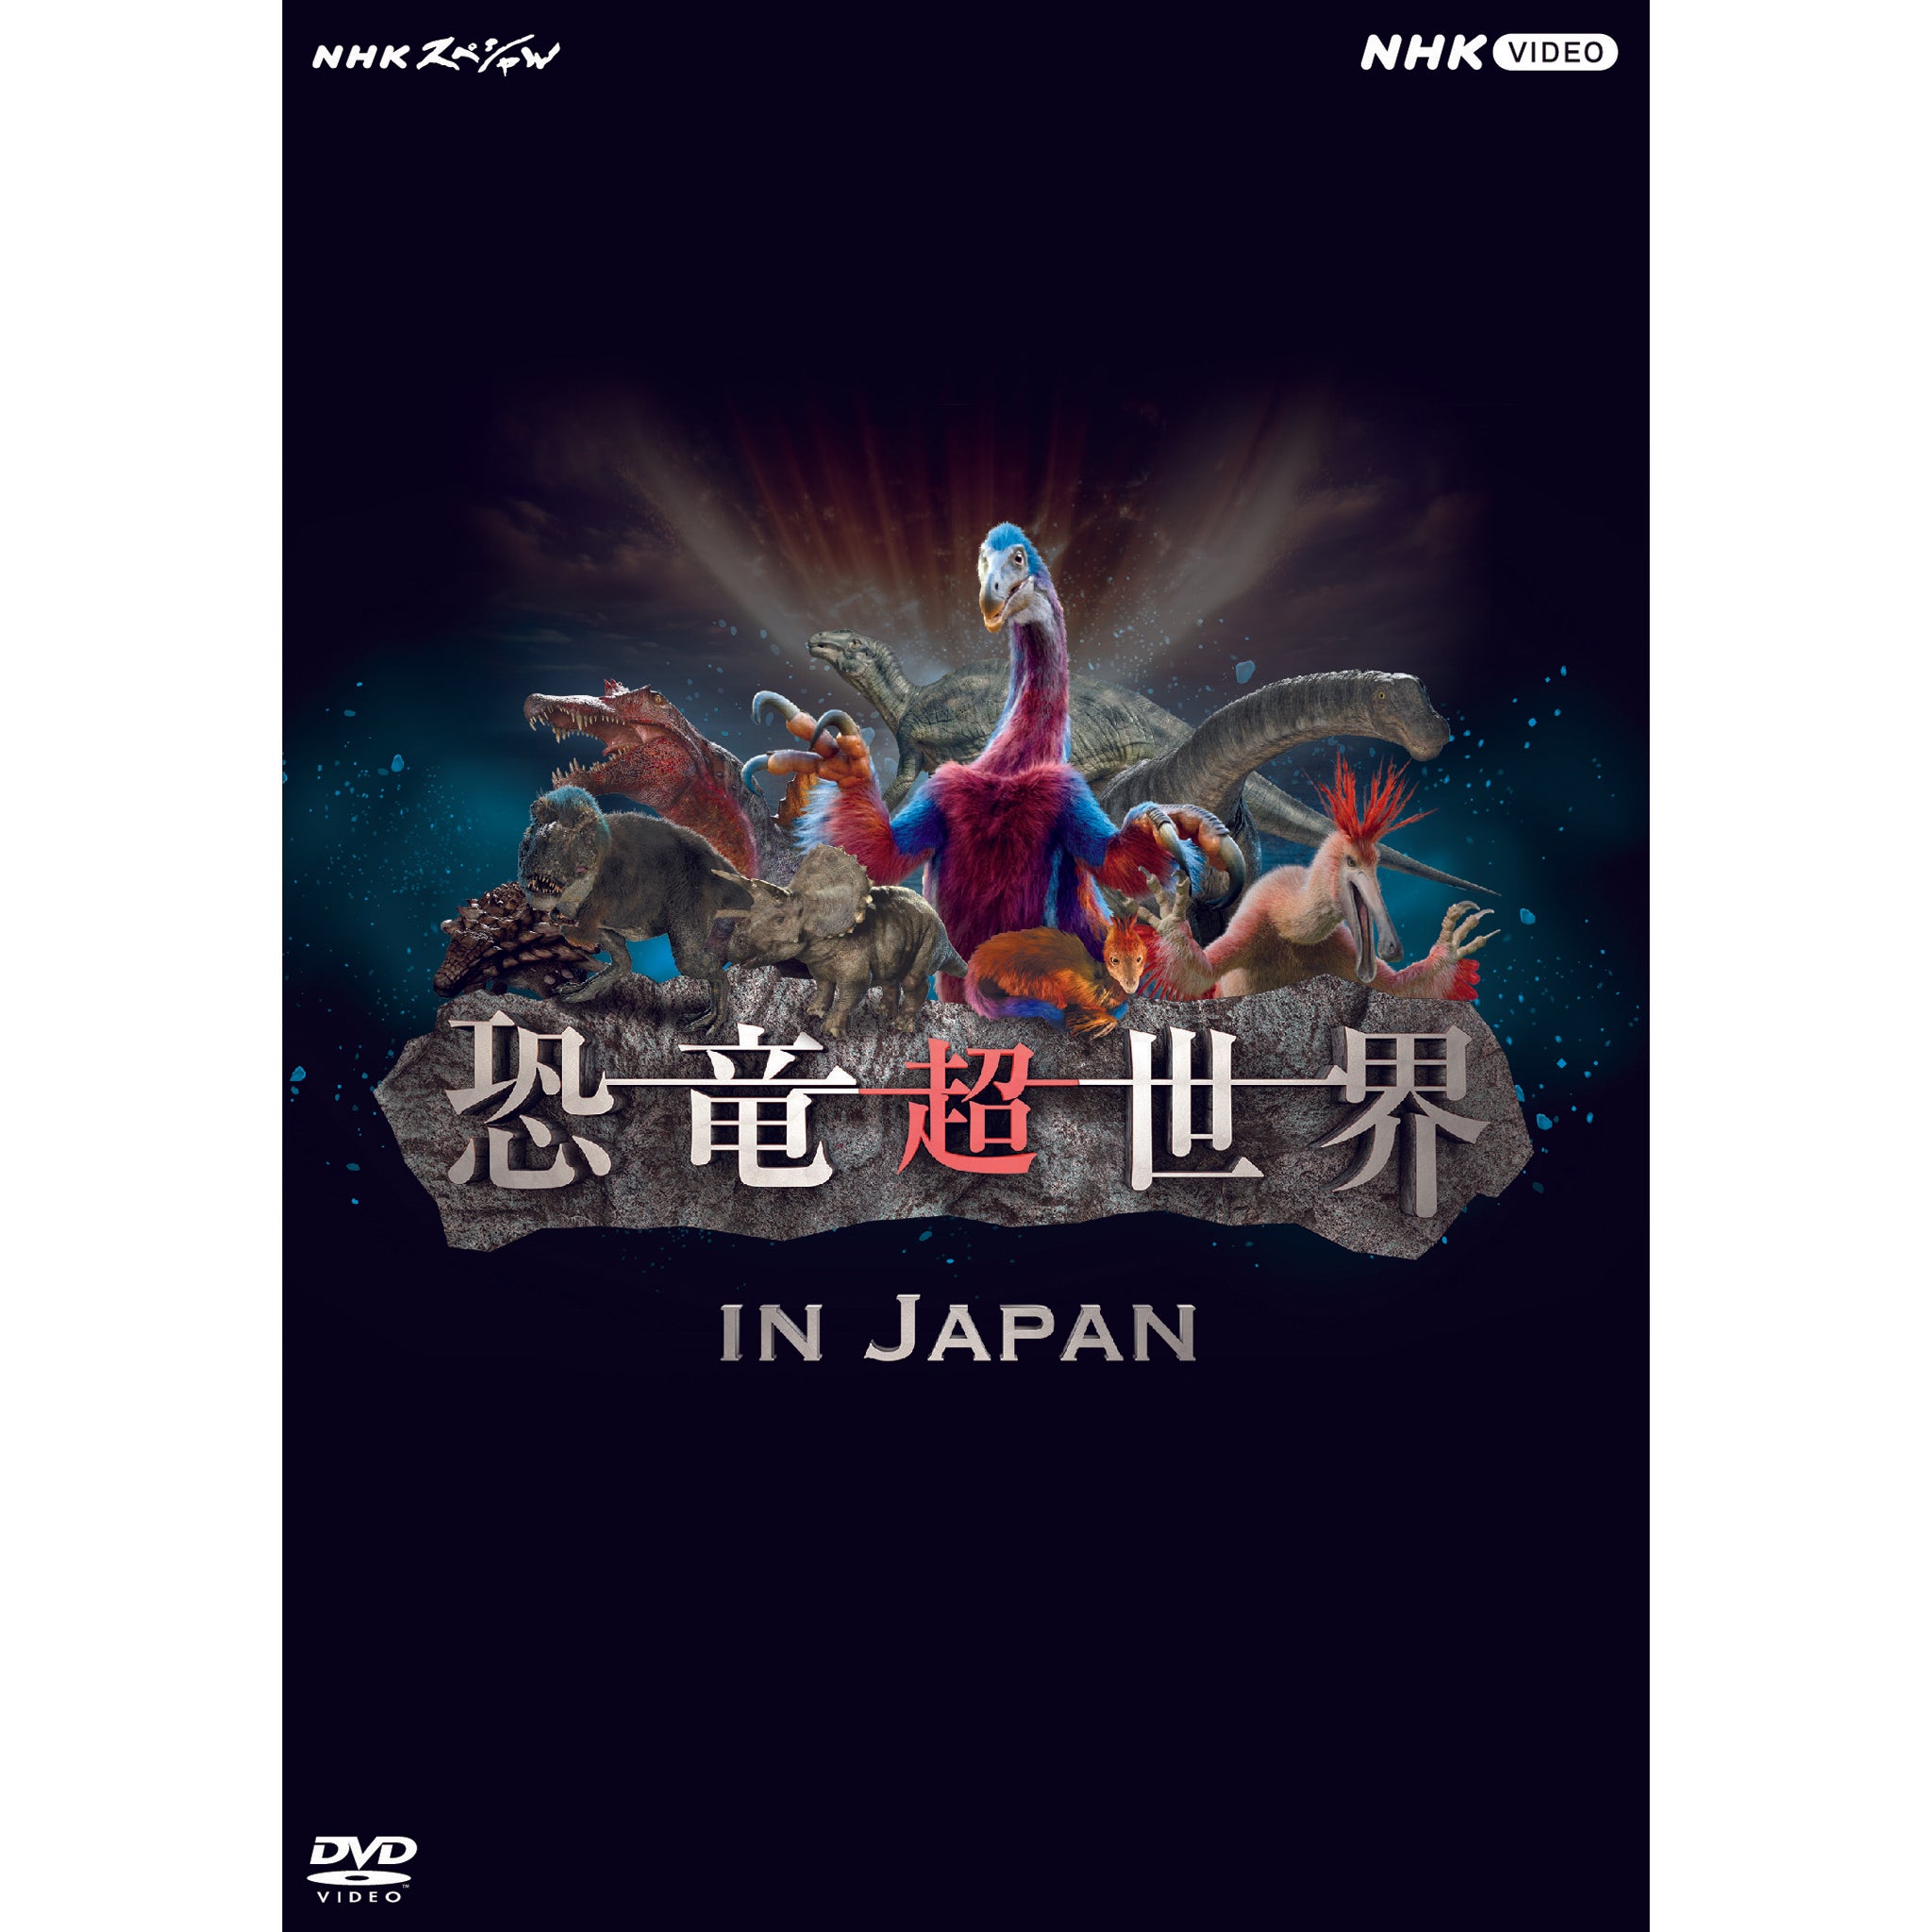 NHKスペシャル 恐竜超世界 in Japan DVD - NHKグループ公式通販 - NHK